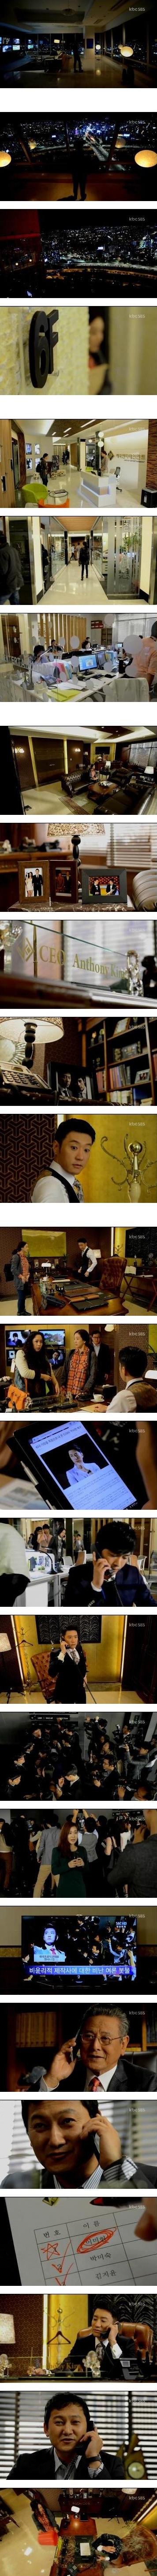 episode 1 captures for the Korean drama 'The King of Dramas'